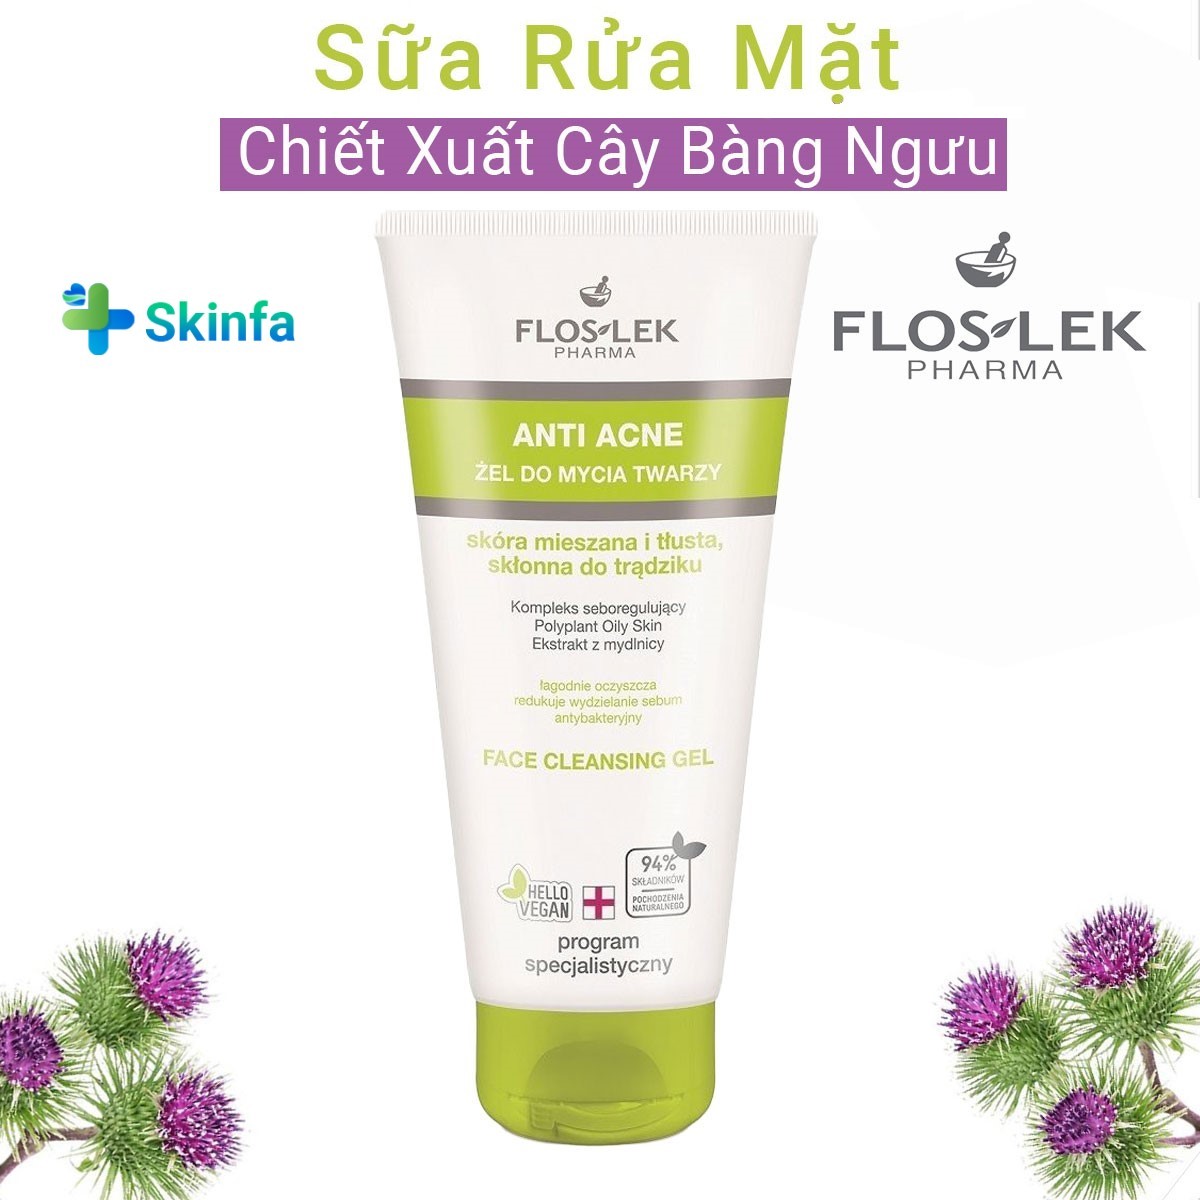 Sửa Rửa Mặt Floslek Cho Da Nhờn Mụn Anti Acne Bacterial Face Cleansing Gel thumbnail